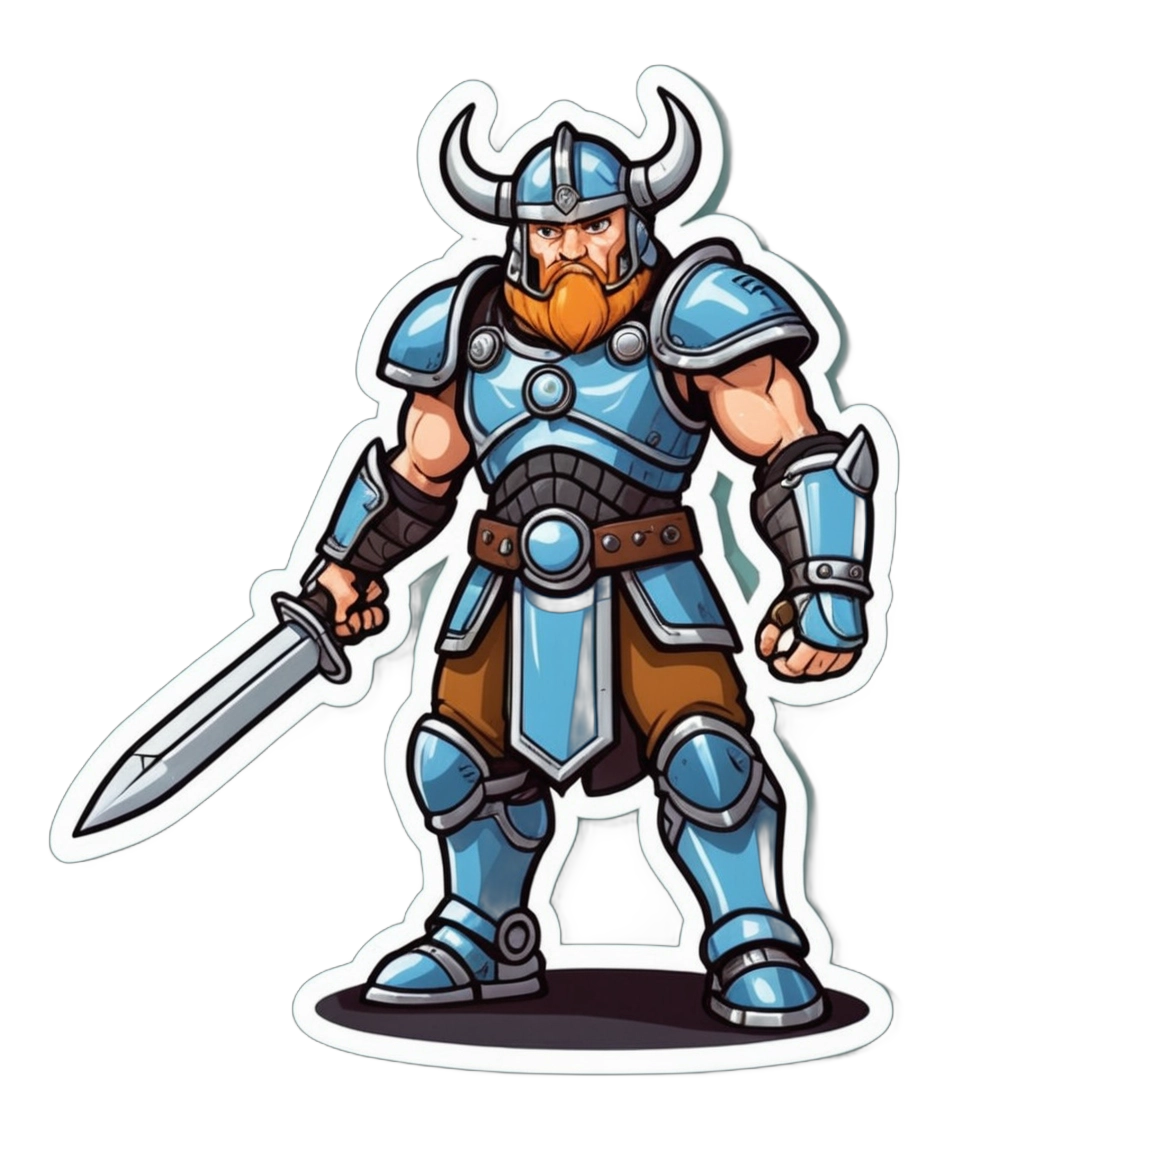 A viking warrior, wearing futuristic armor in a fierce stance